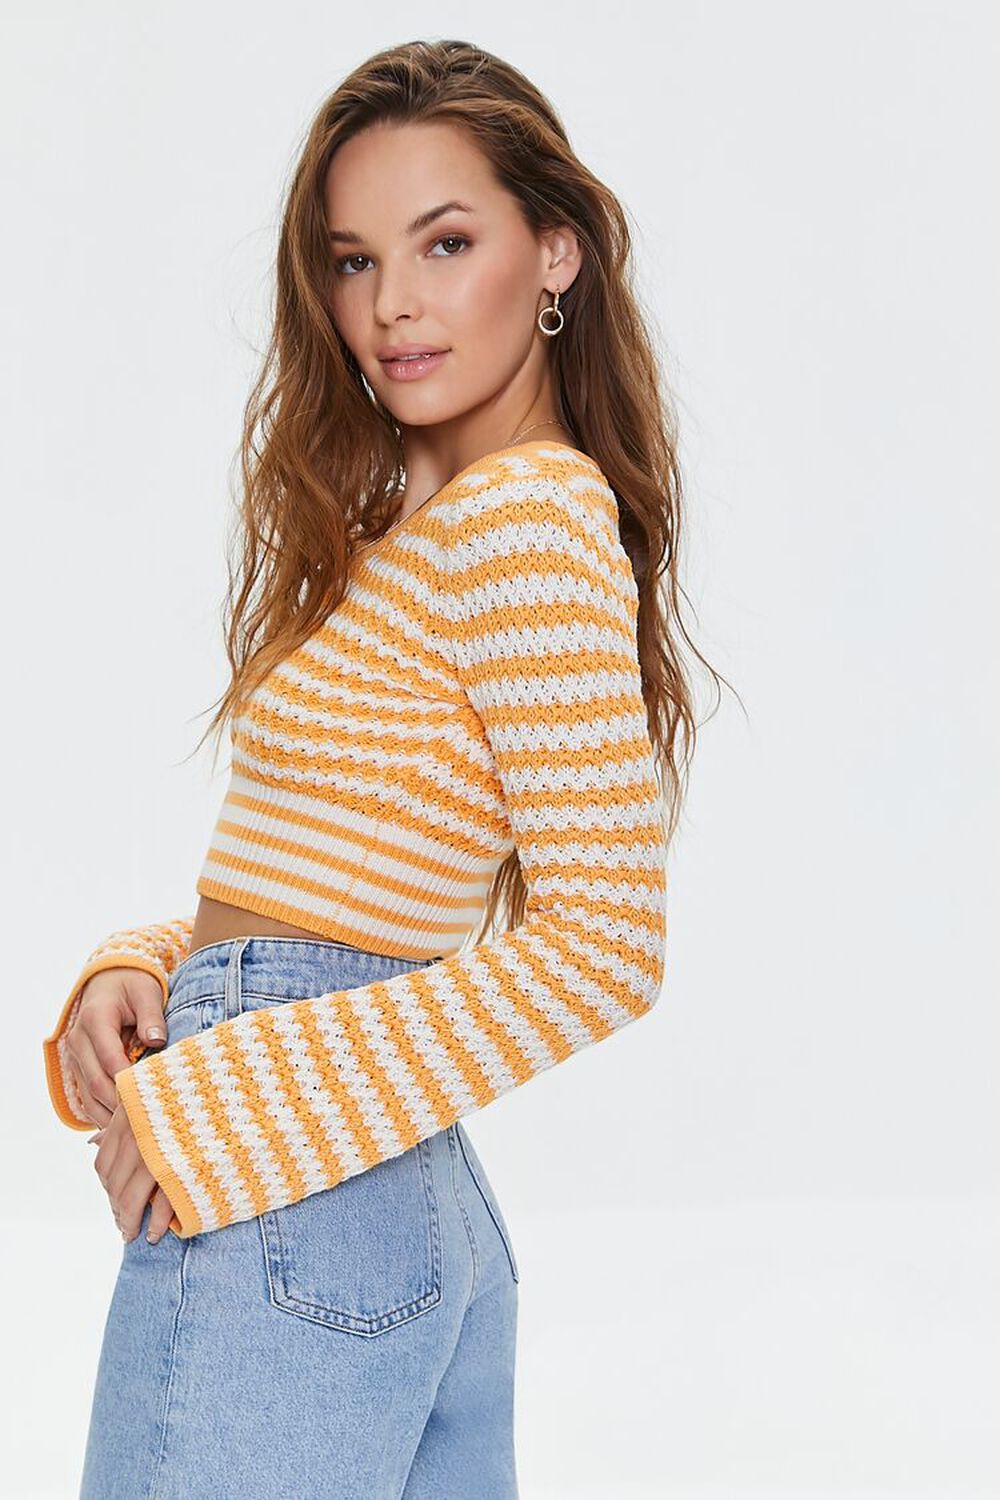 ORANGE/CREAM Striped Cropped Sweater, image 3